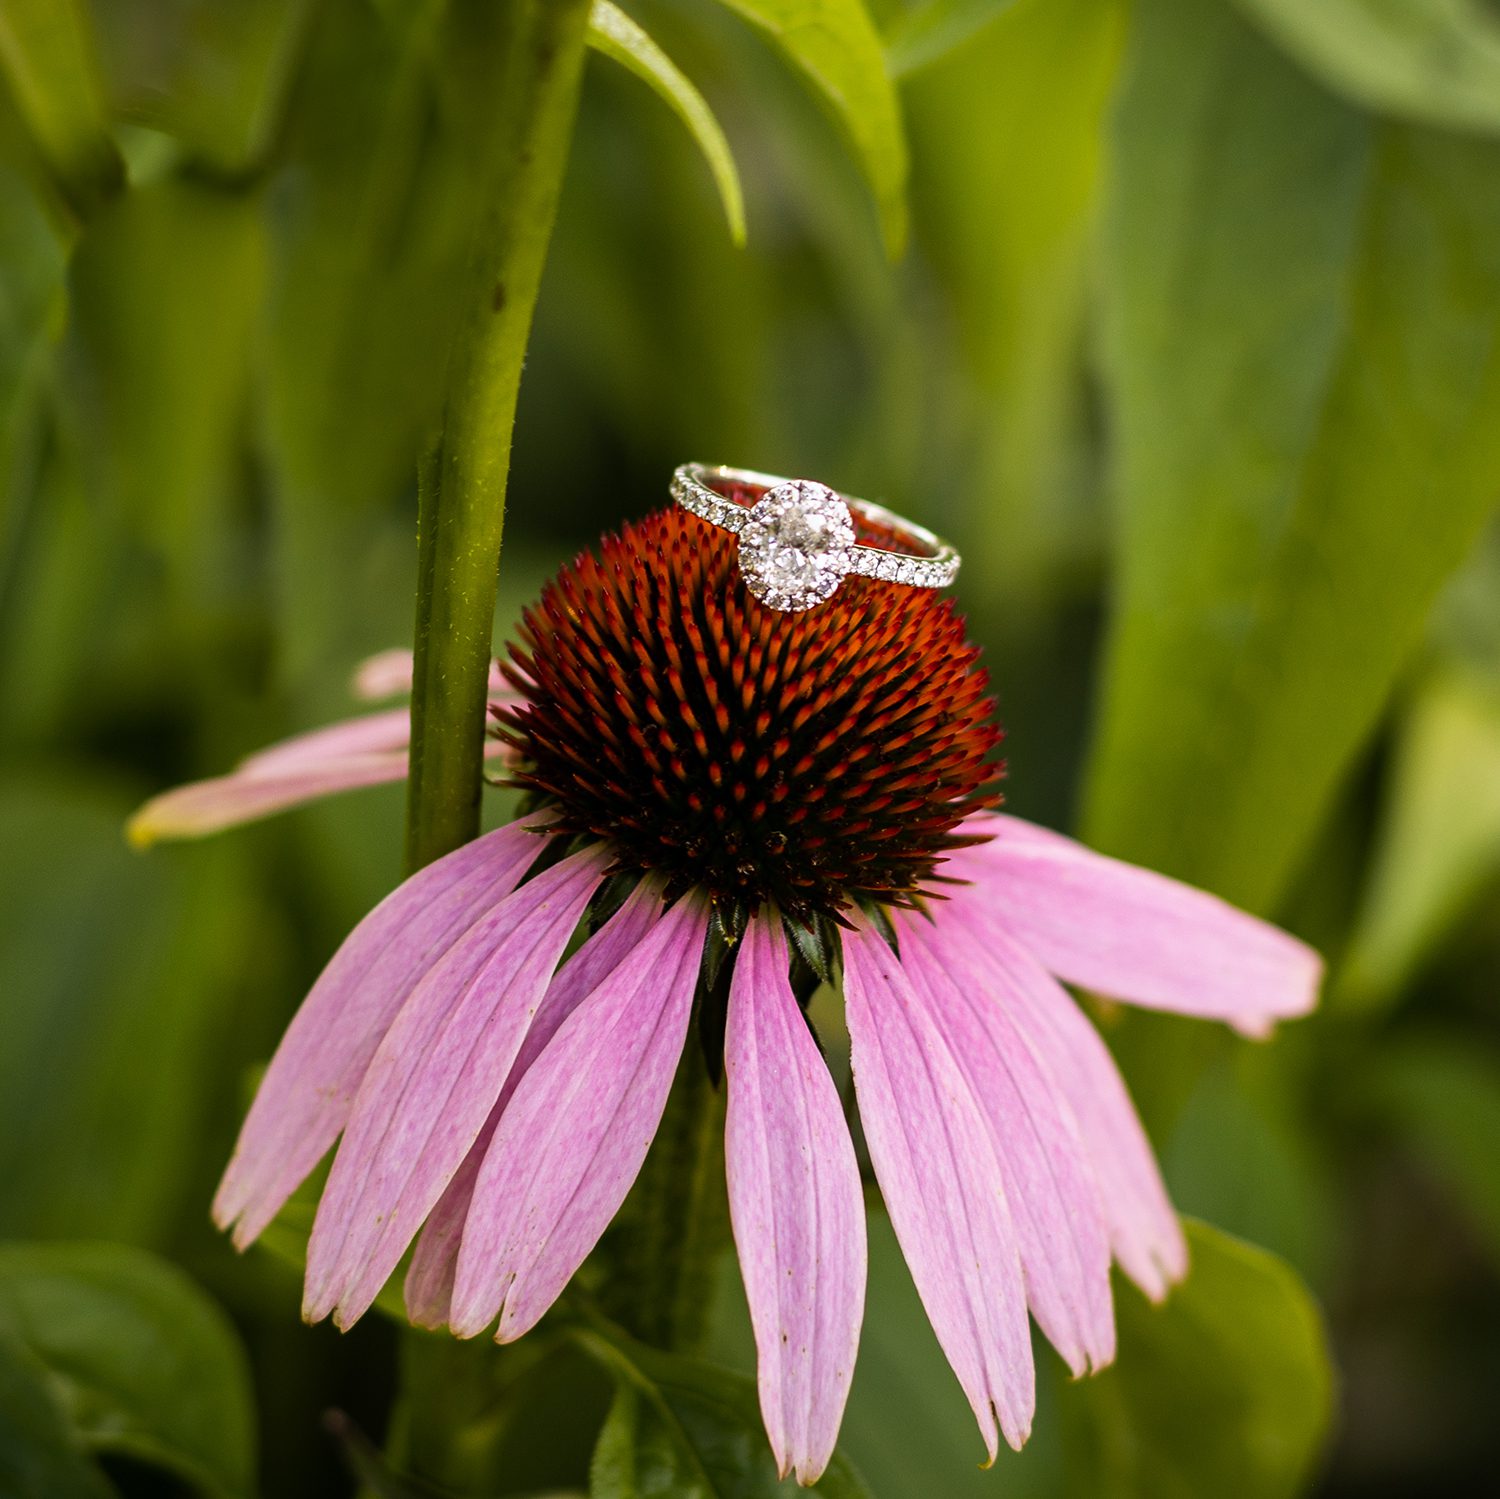 Wedding Ring on a flower